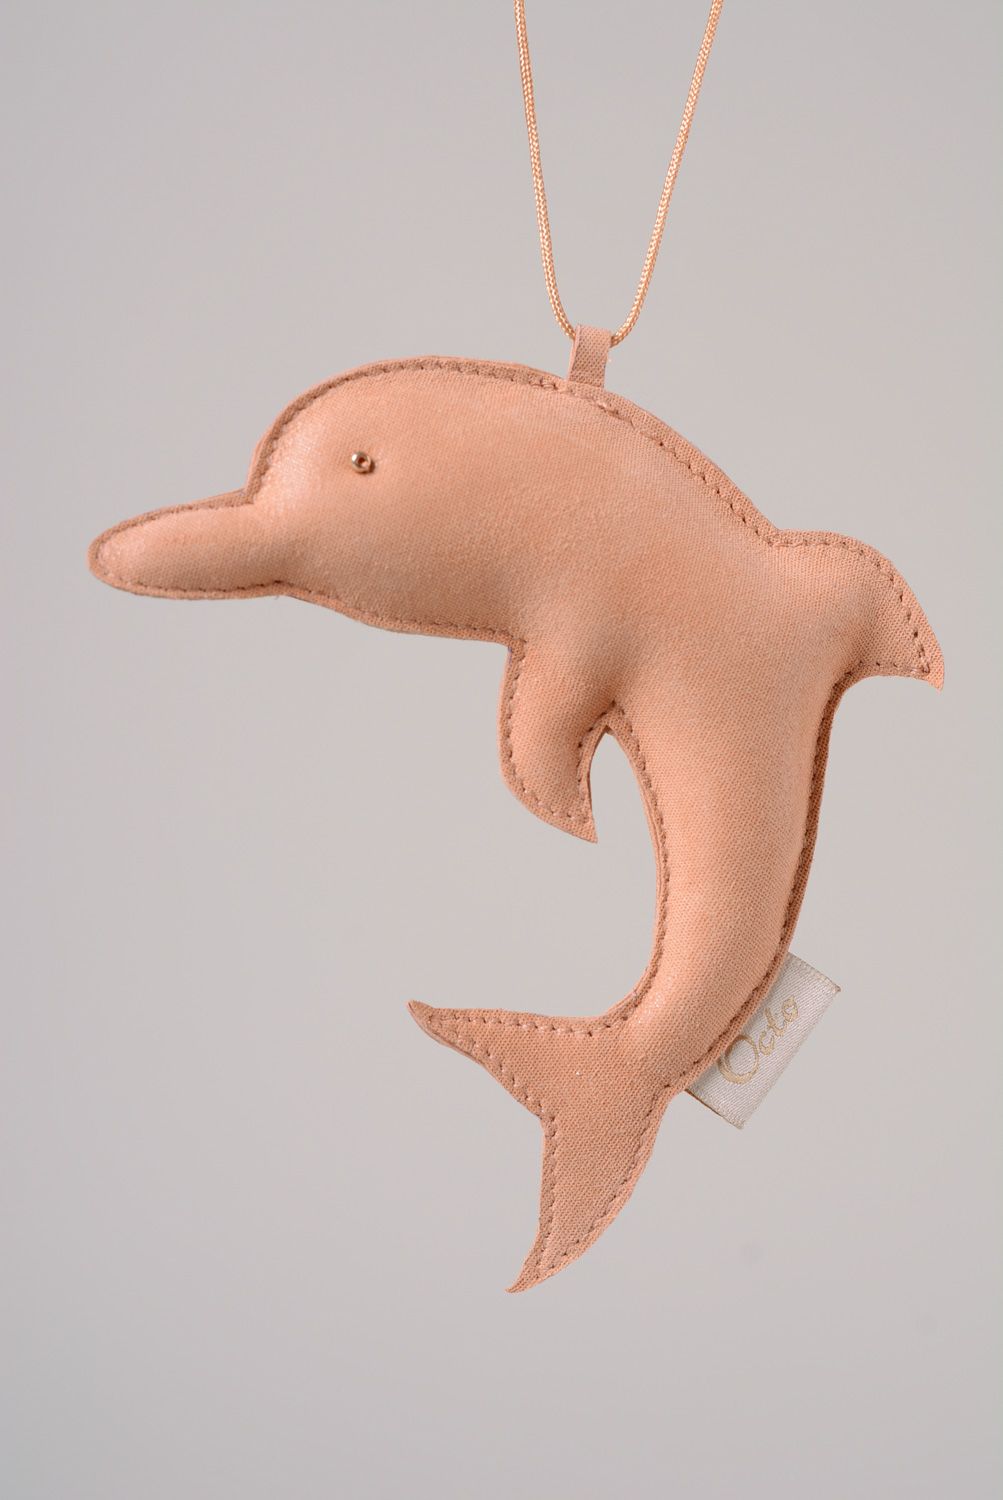 Handmade leather keychain or bag charm Pink Dolphin photo 1